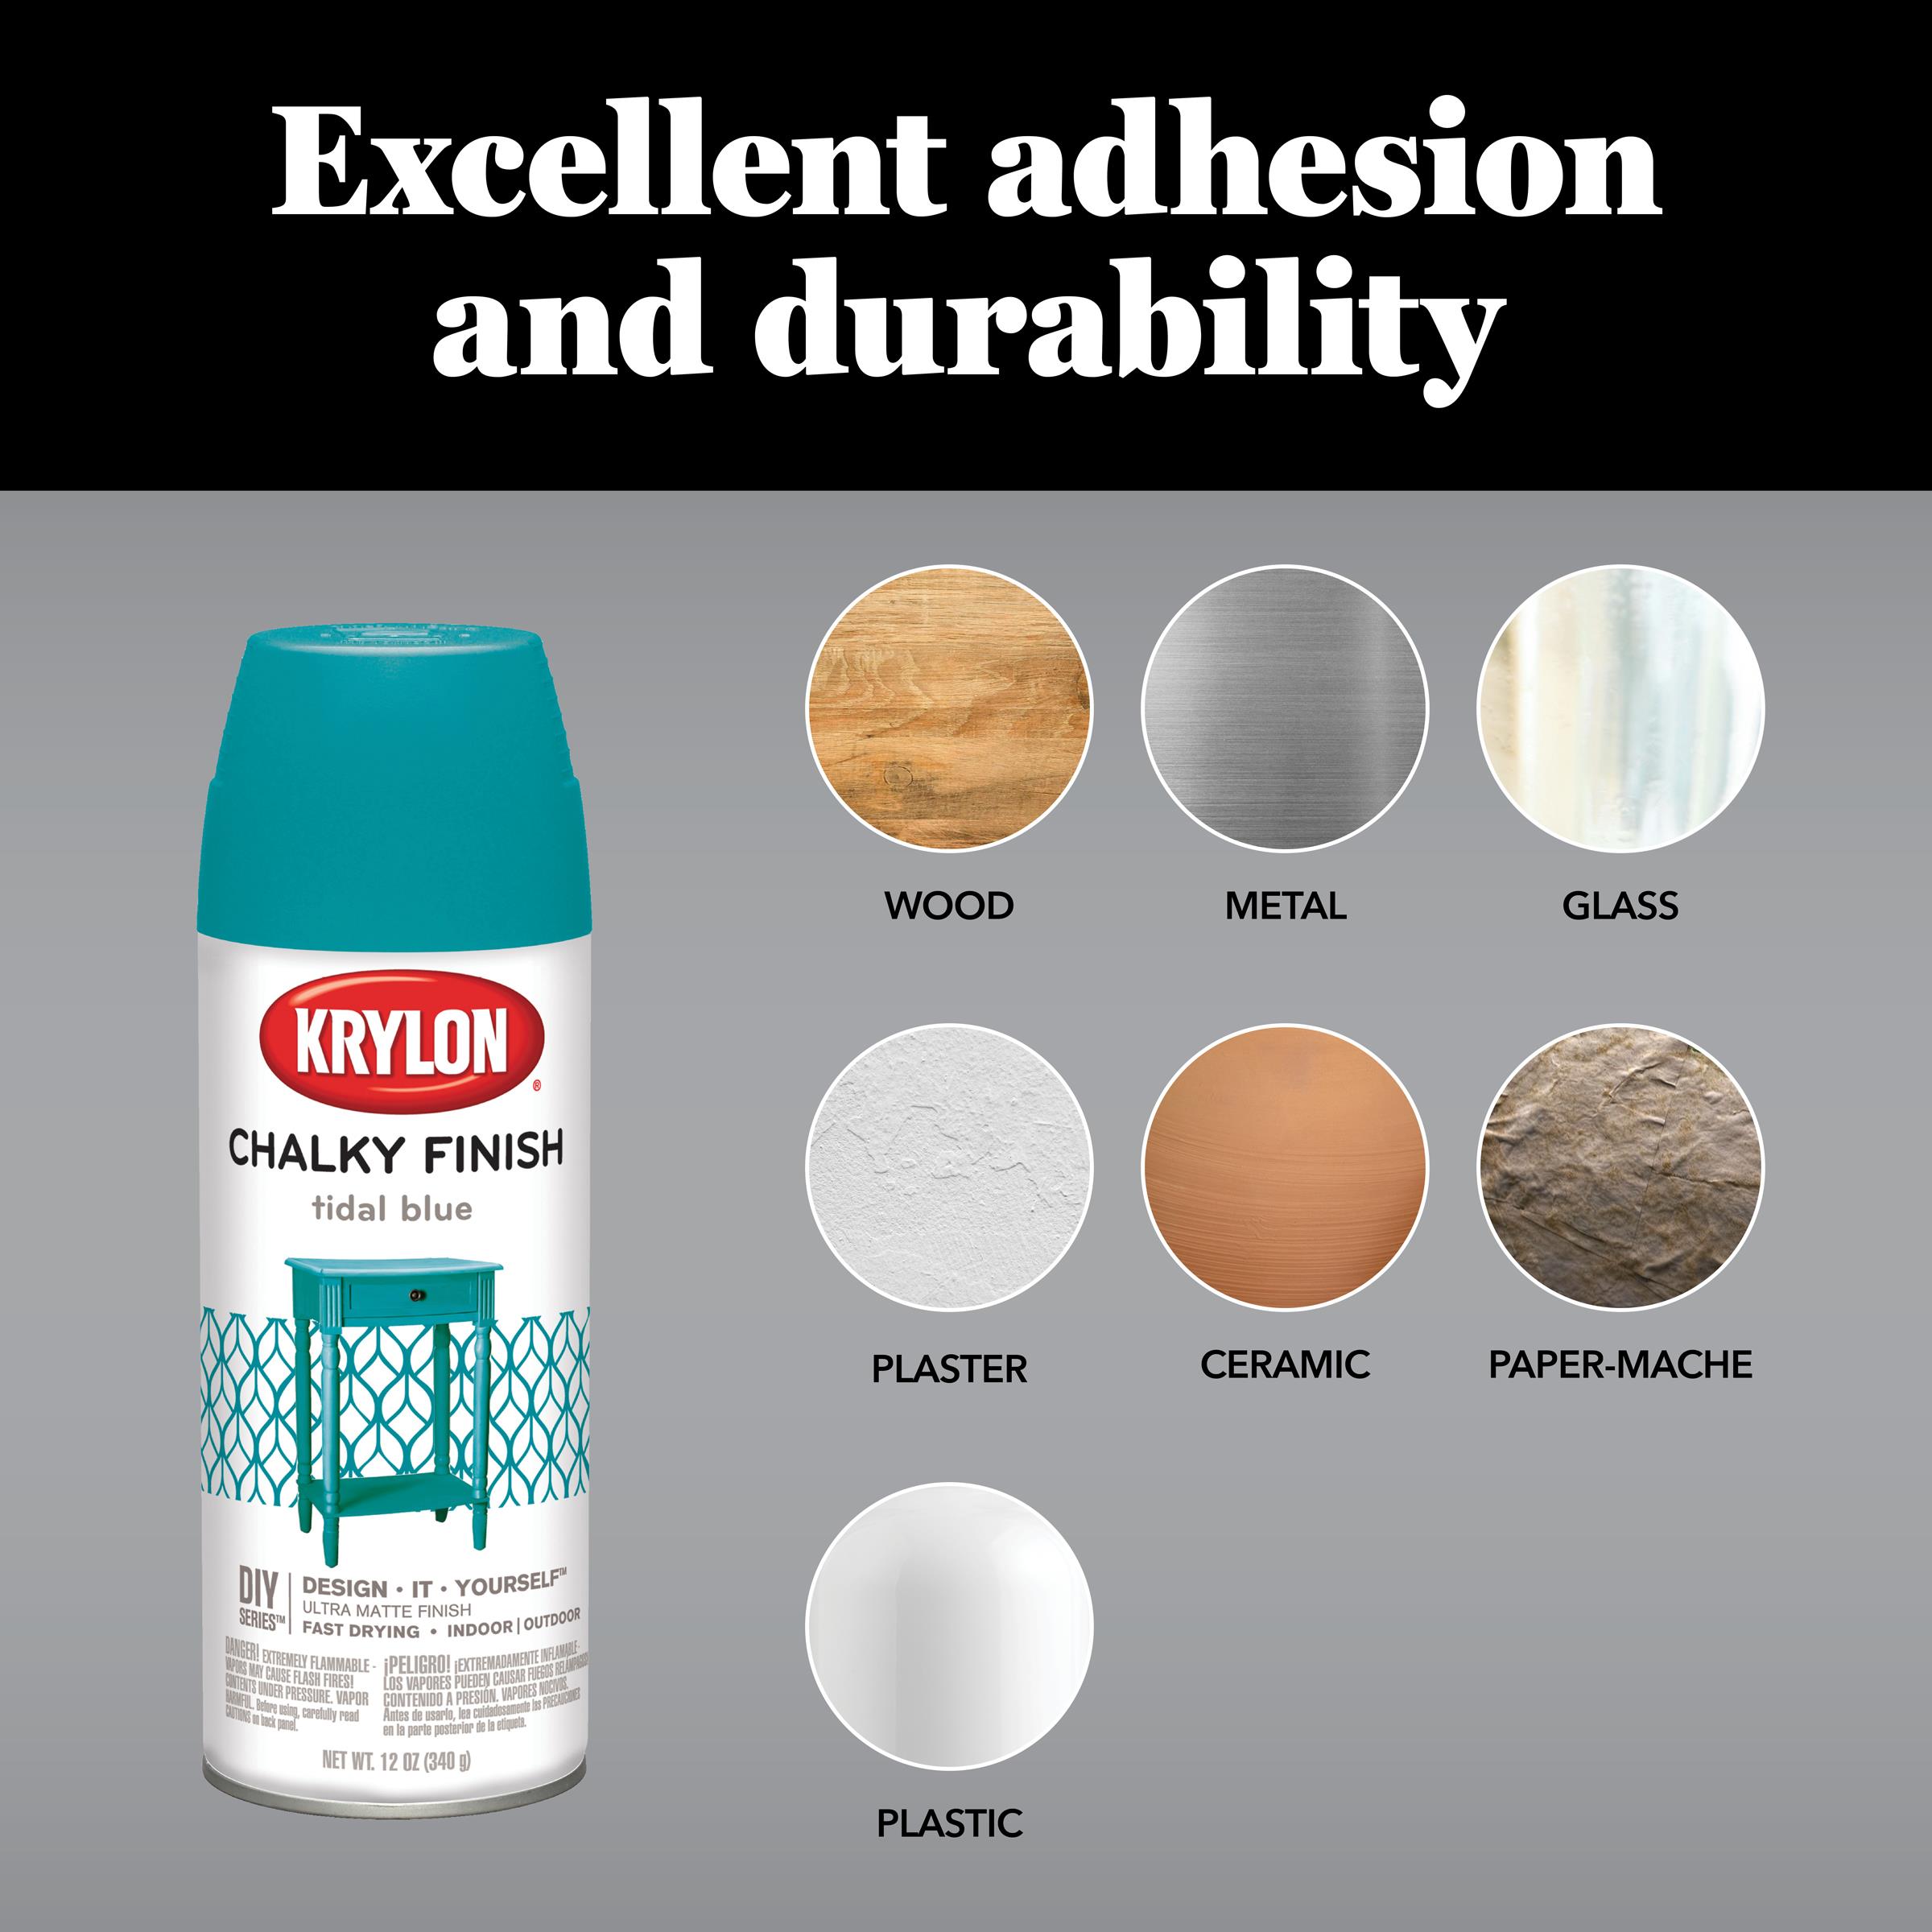 The Best Chalk Spray Paint  Rust-Oleum VS Magnolia VS Krylon VS